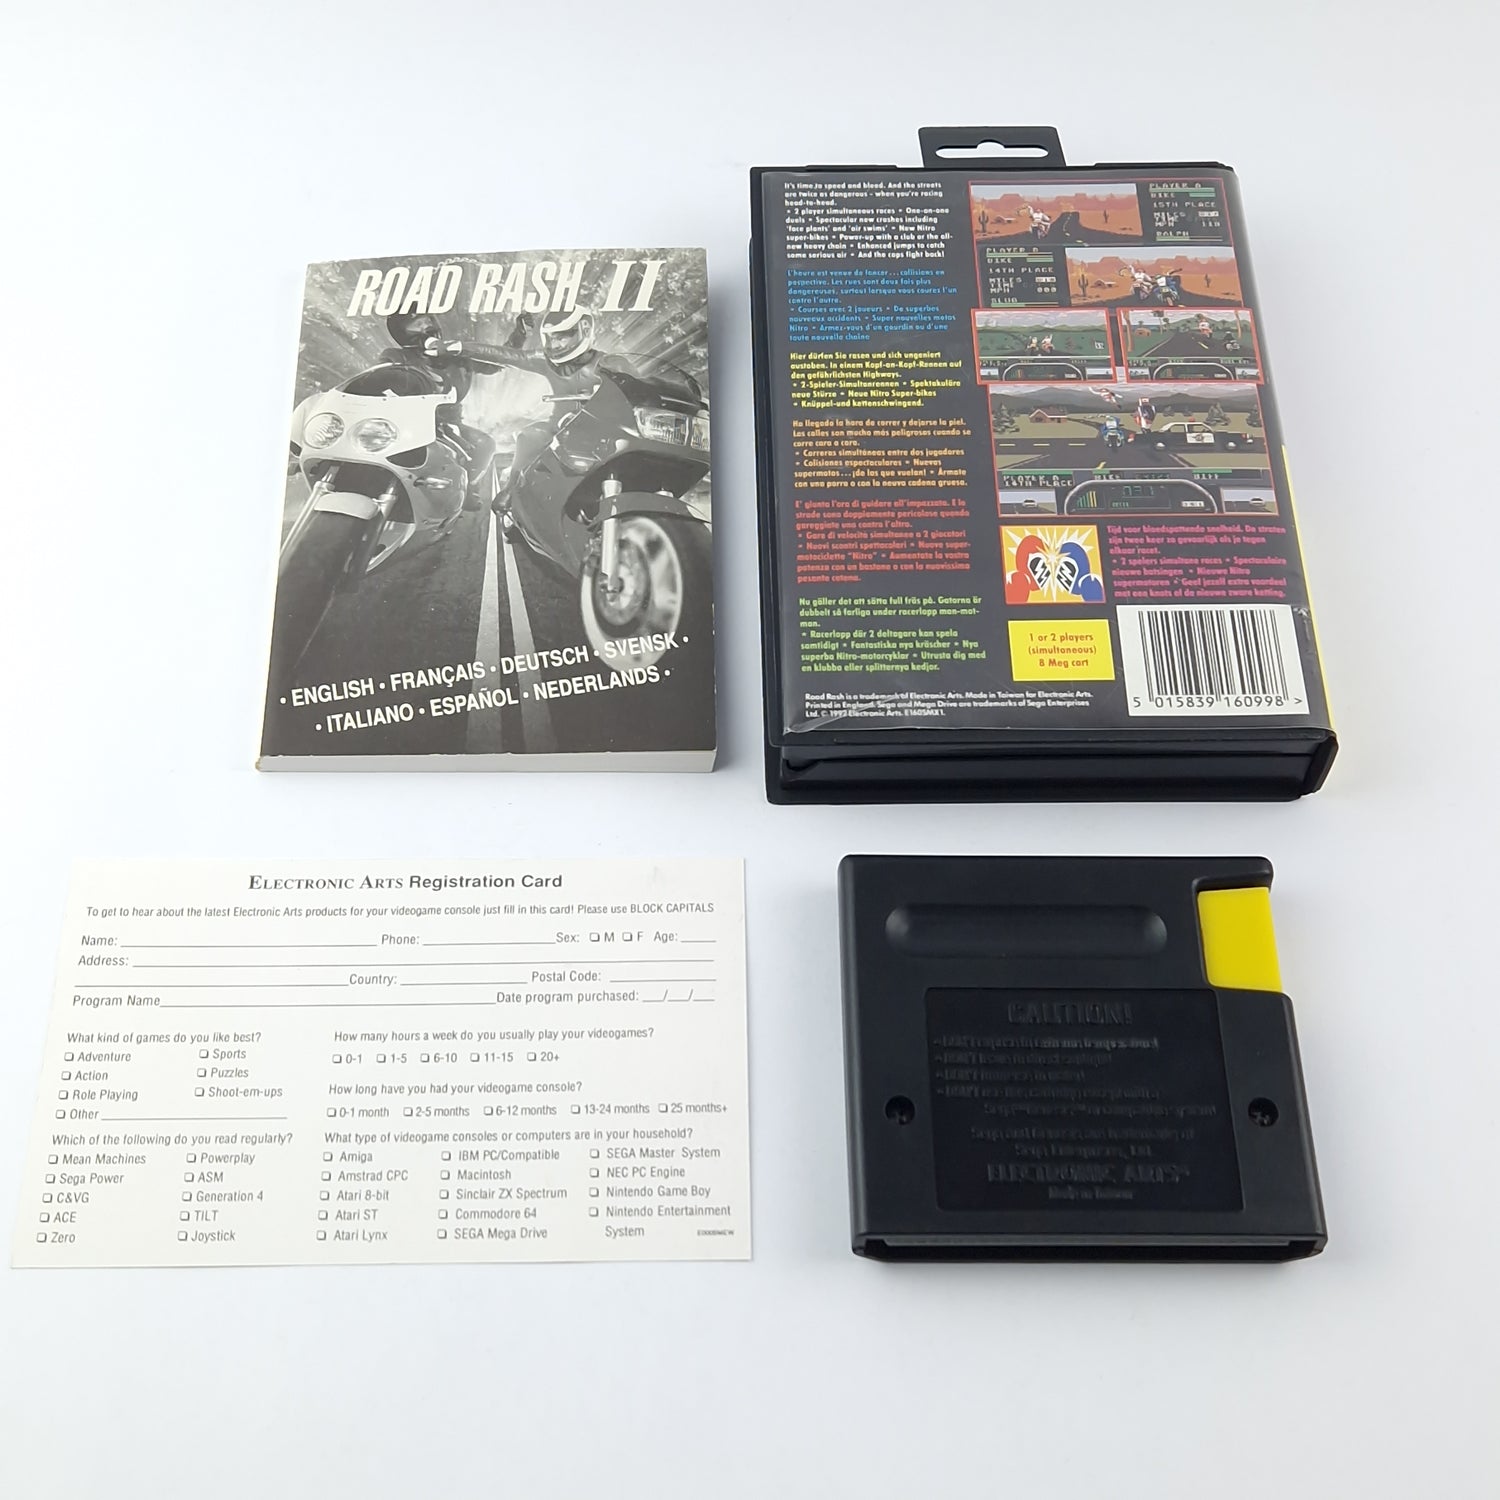 Sega Mega Drive Spiel : Road Rash II 2 - OVP Anleitung Modul | 16-Bit Pal Game